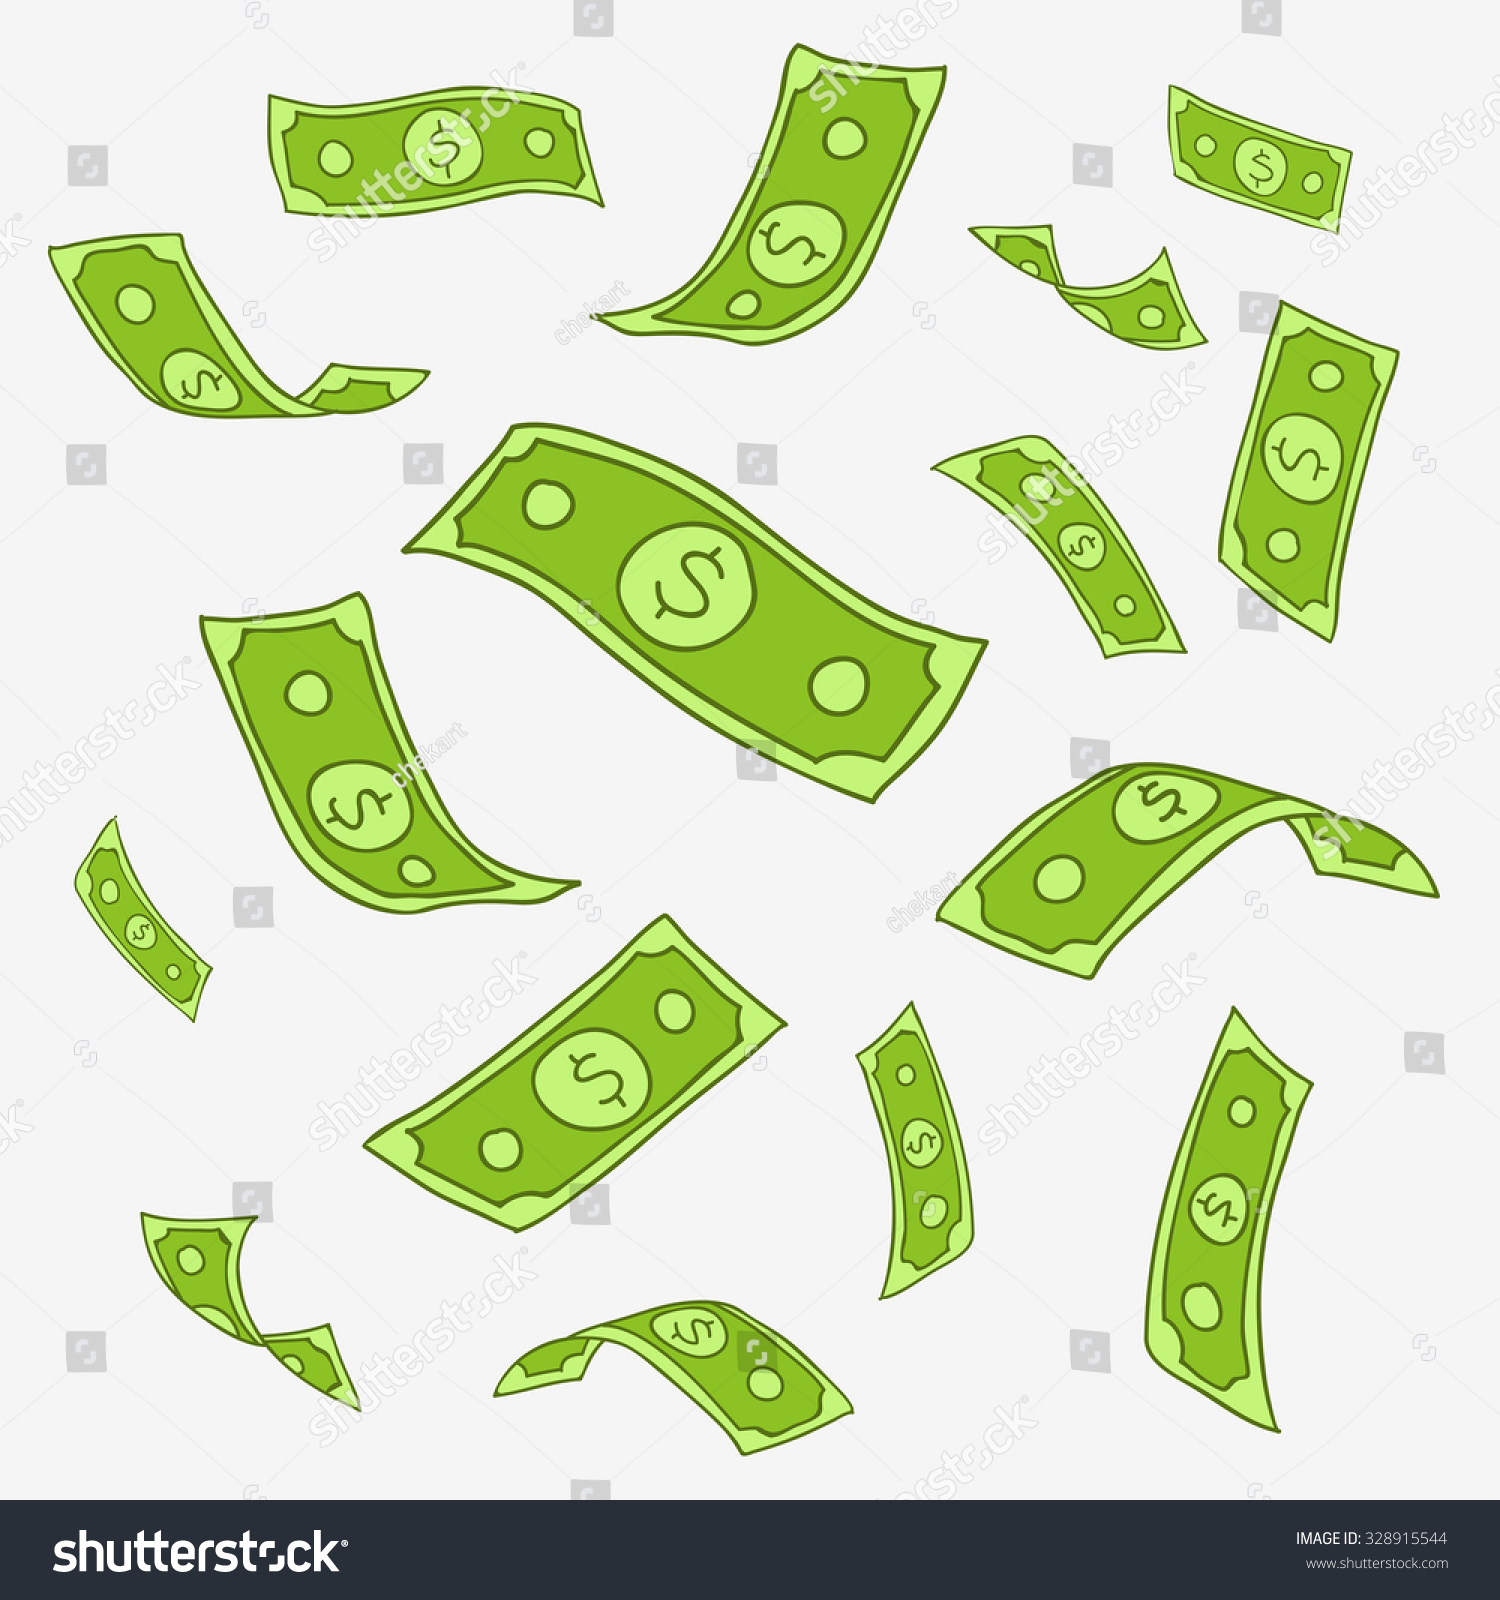 money clipart vector - photo #10